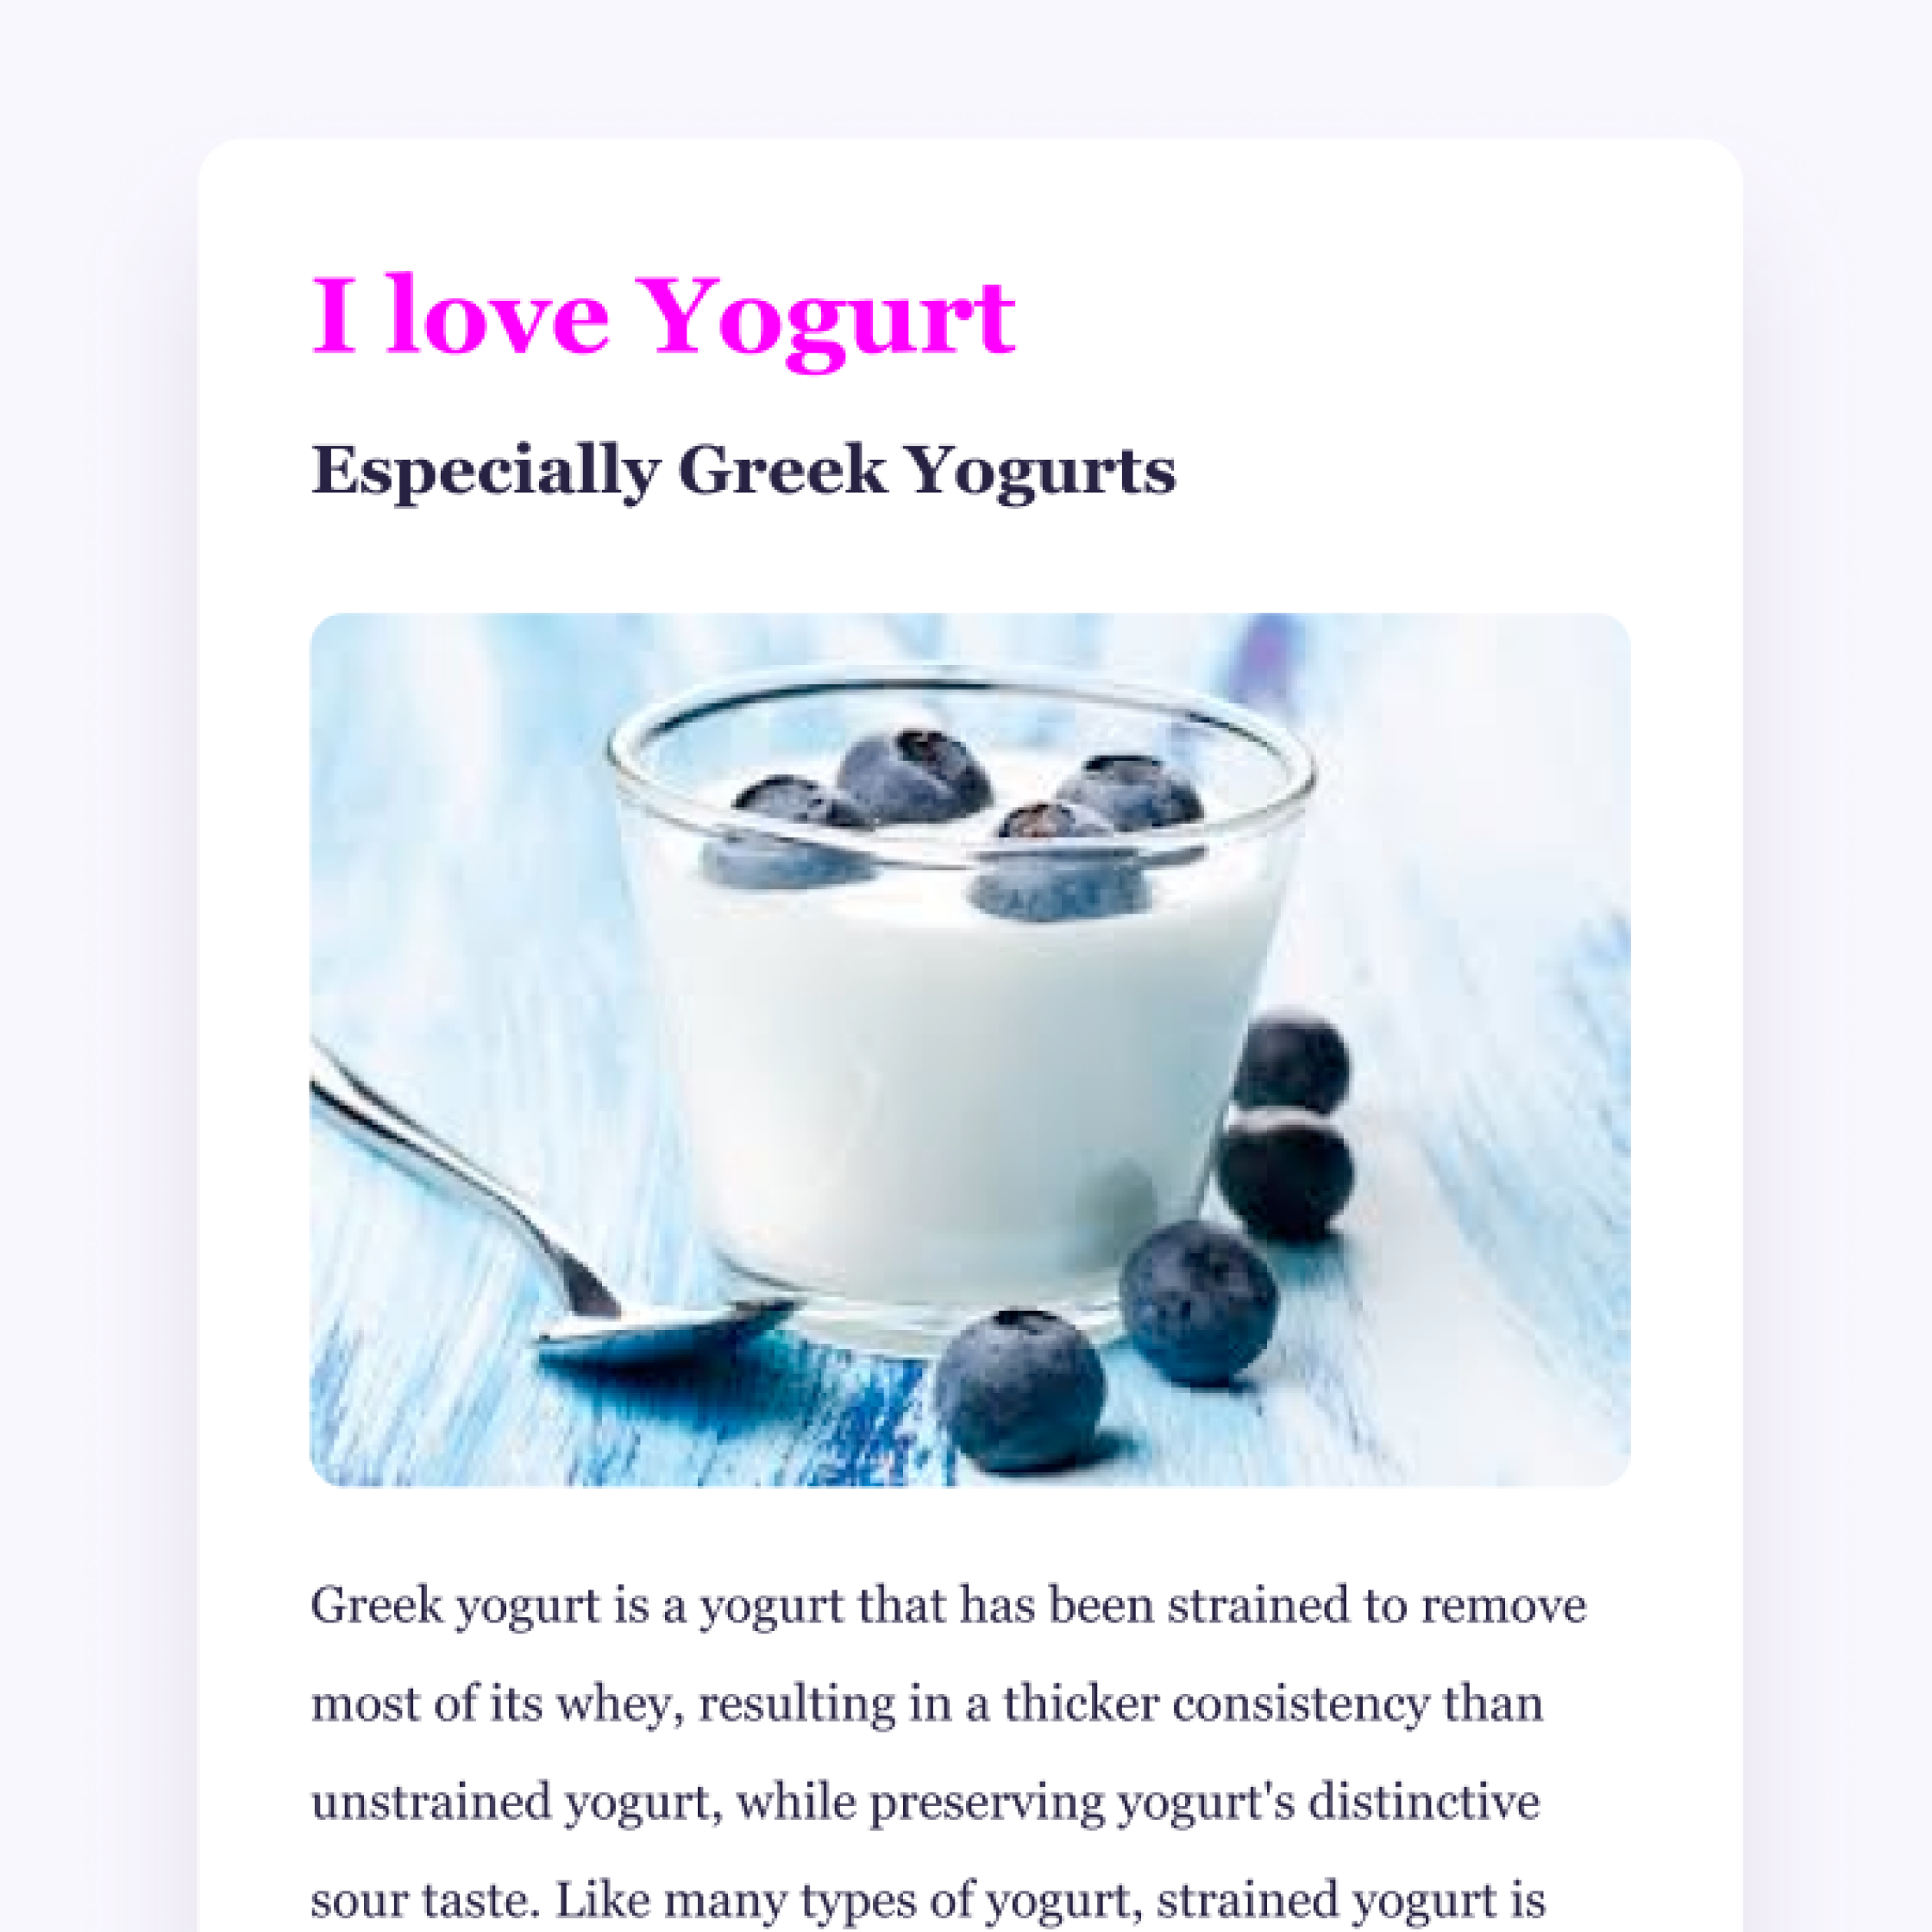 image of yogurt app